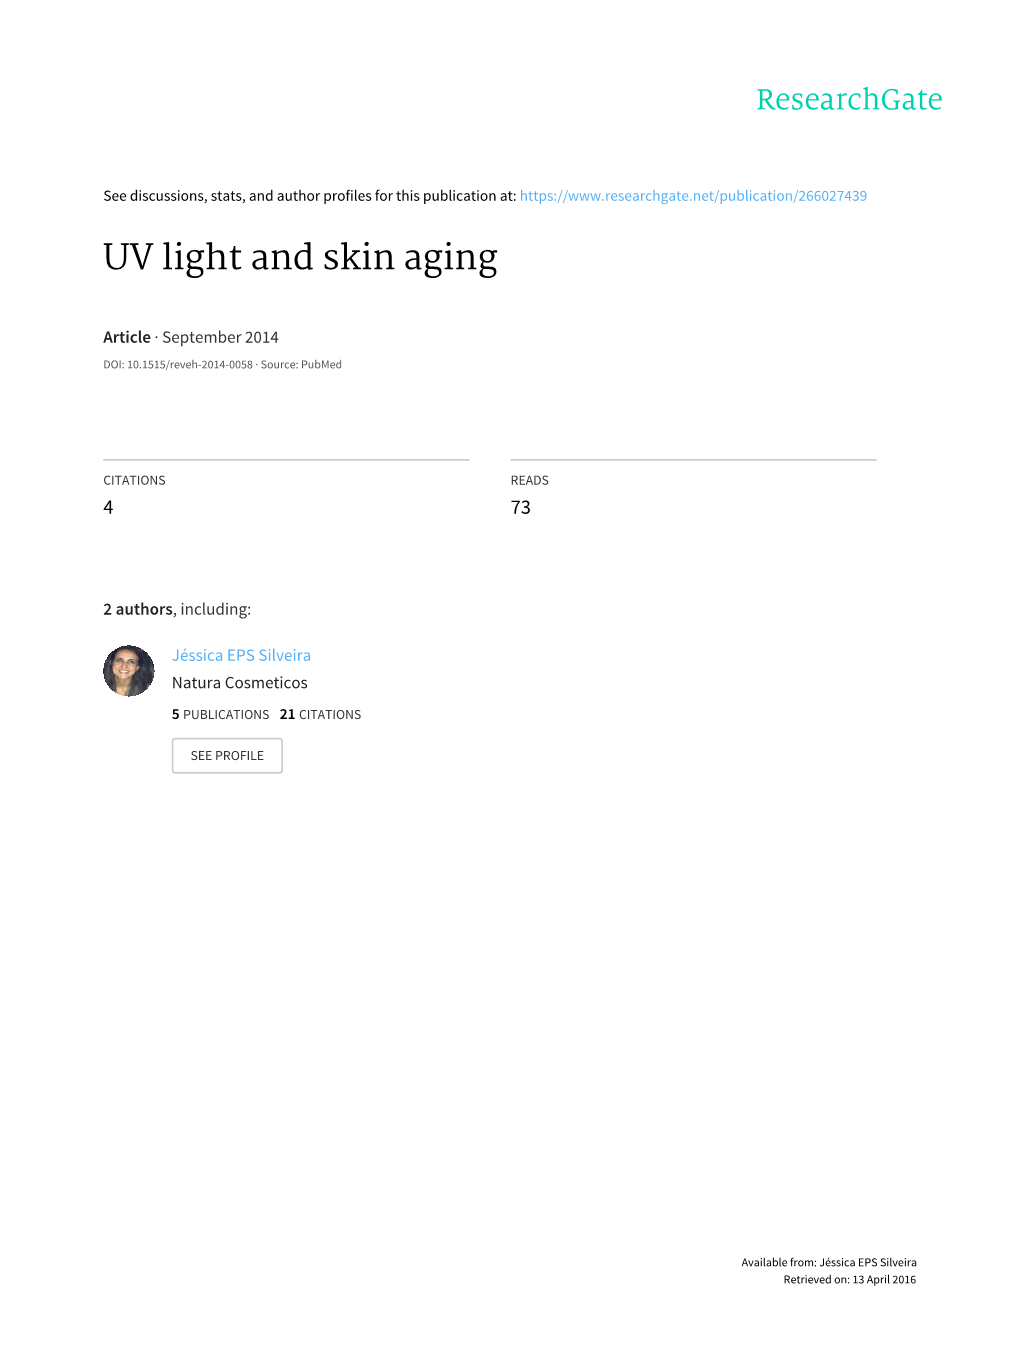 UV Light and Skin Aging